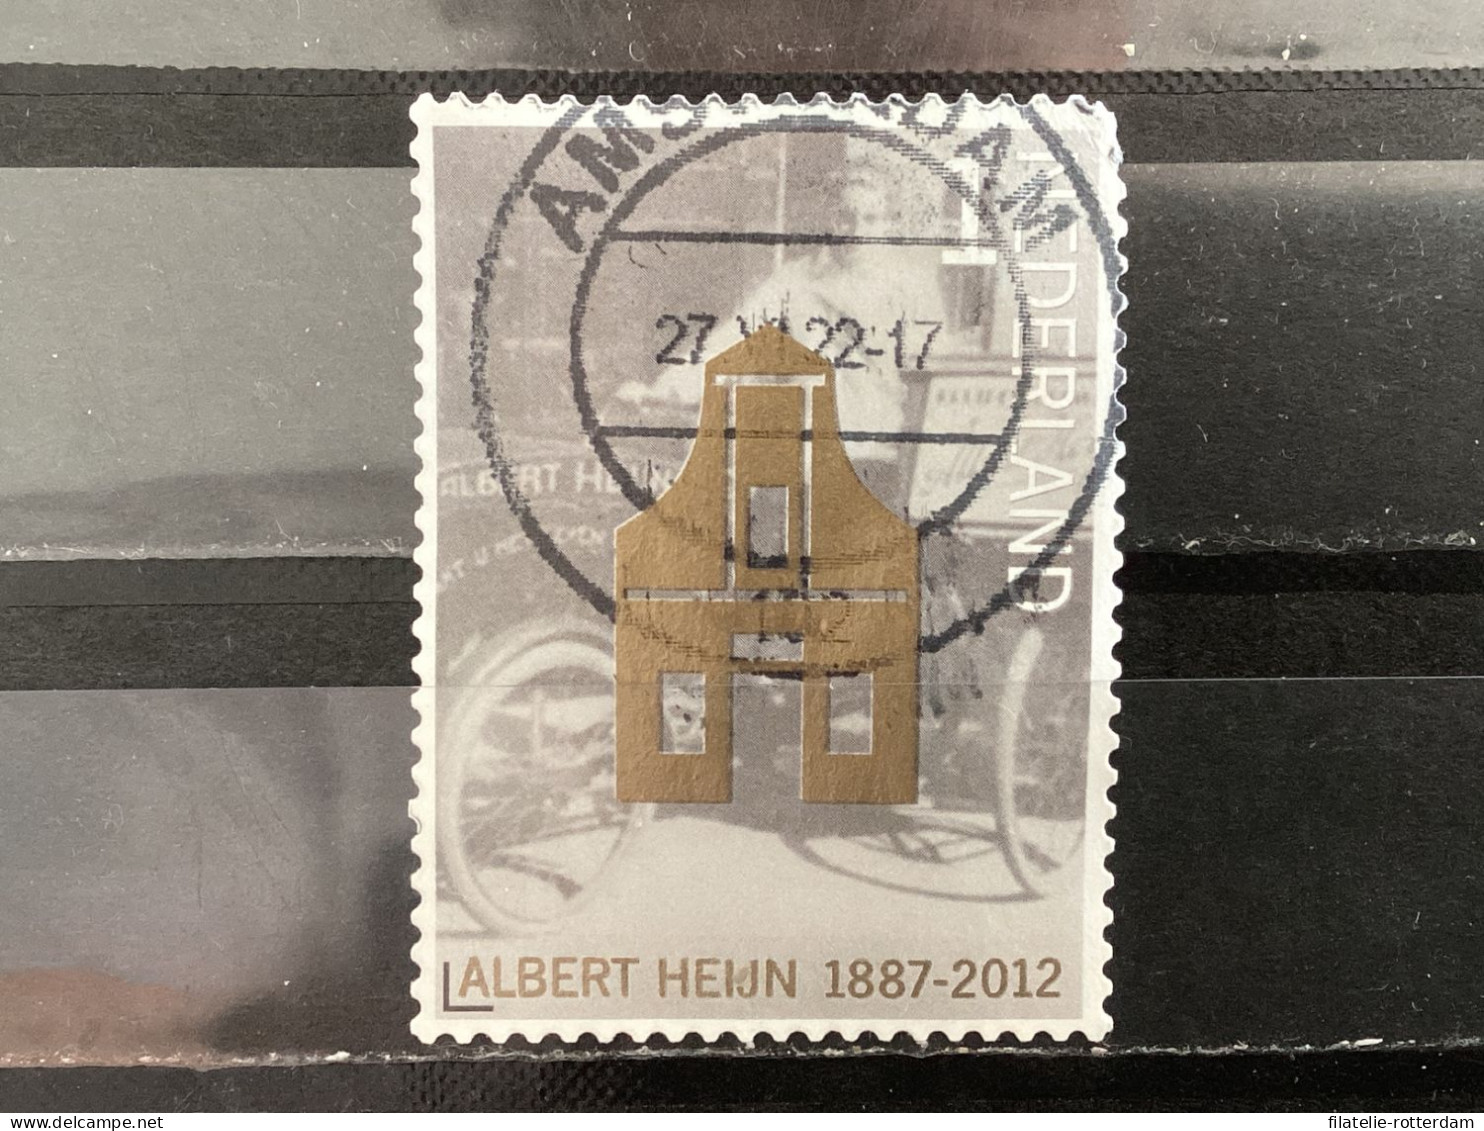 The Netherlands / Nederland - Albert Heijn 2012 - Used Stamps